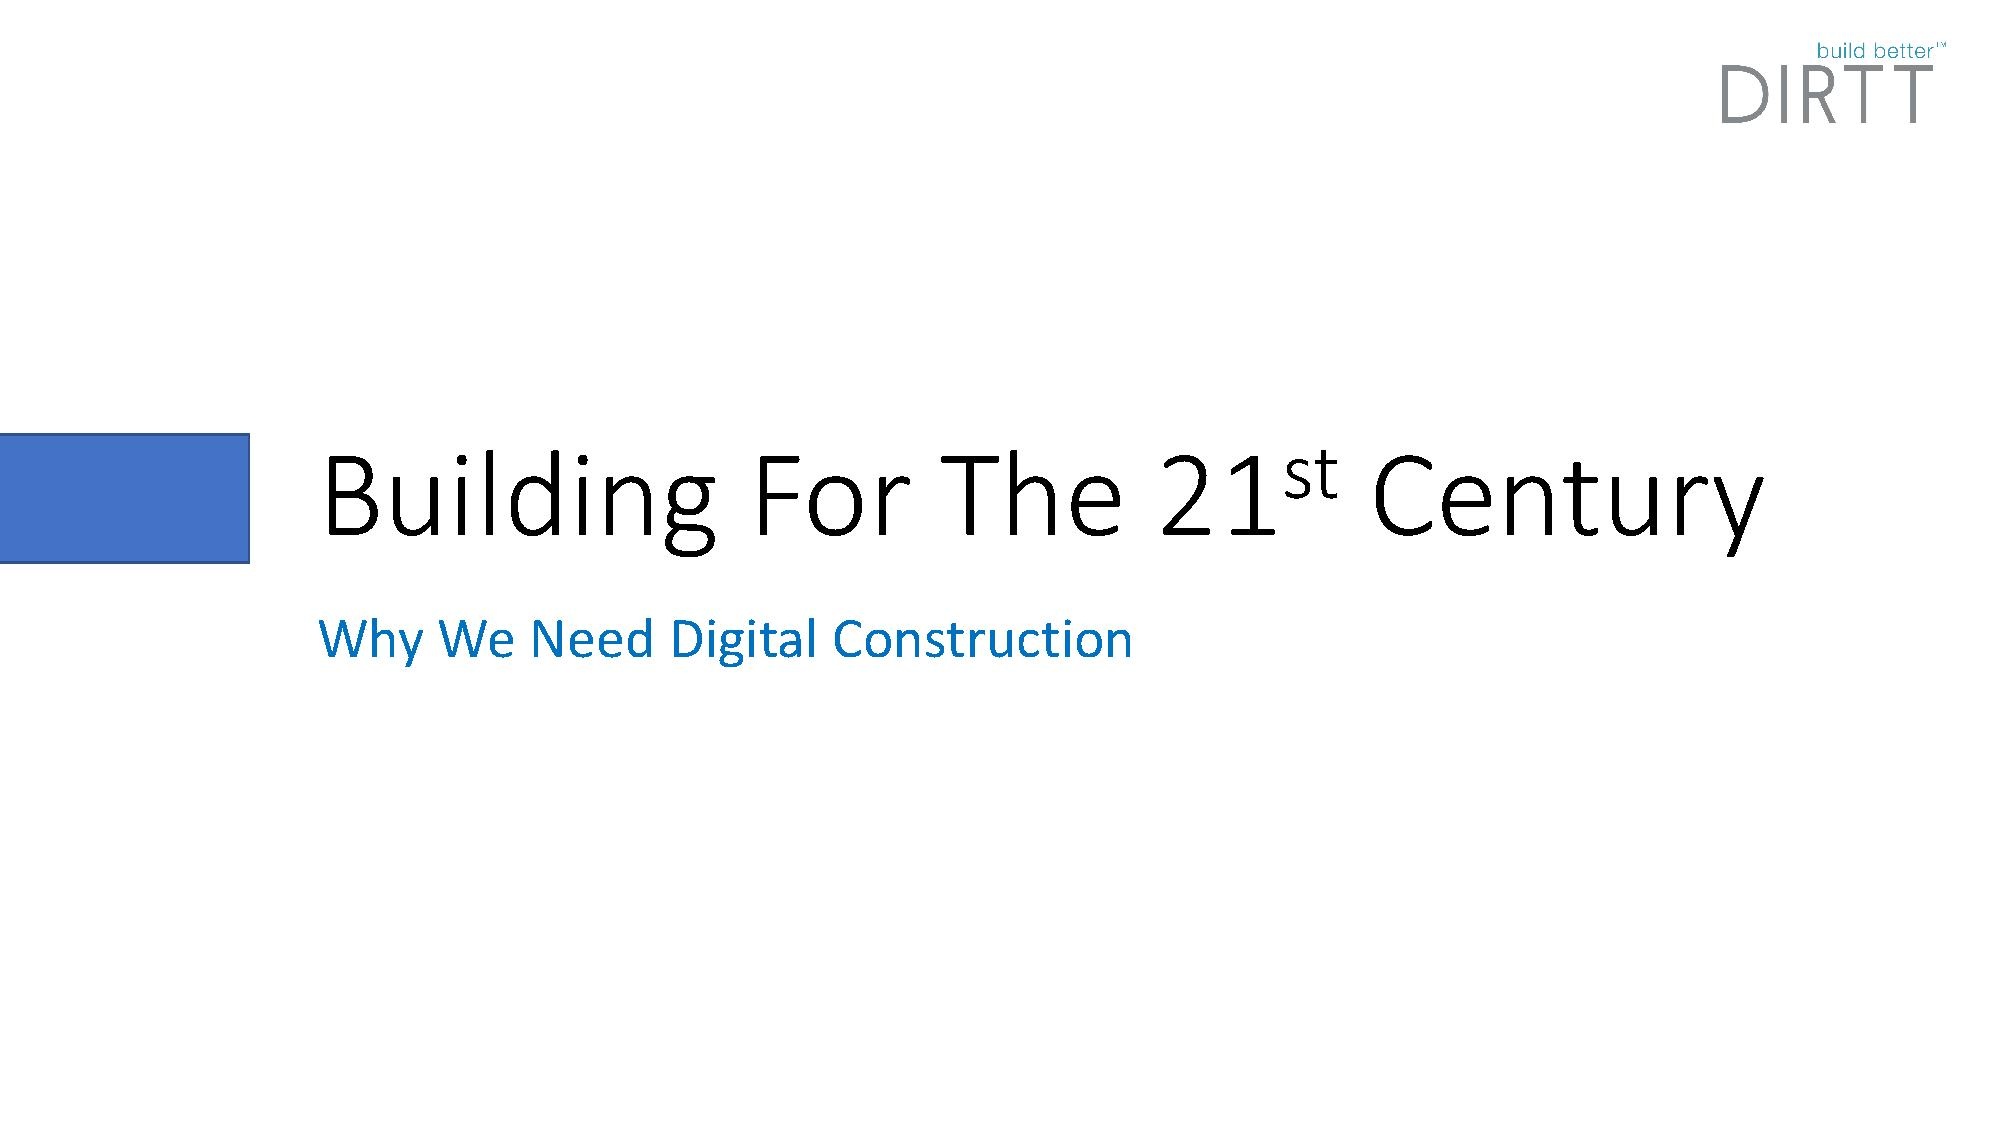 Building for 21stcentury DIRTT Feb 2020 Exec Summary.pdf